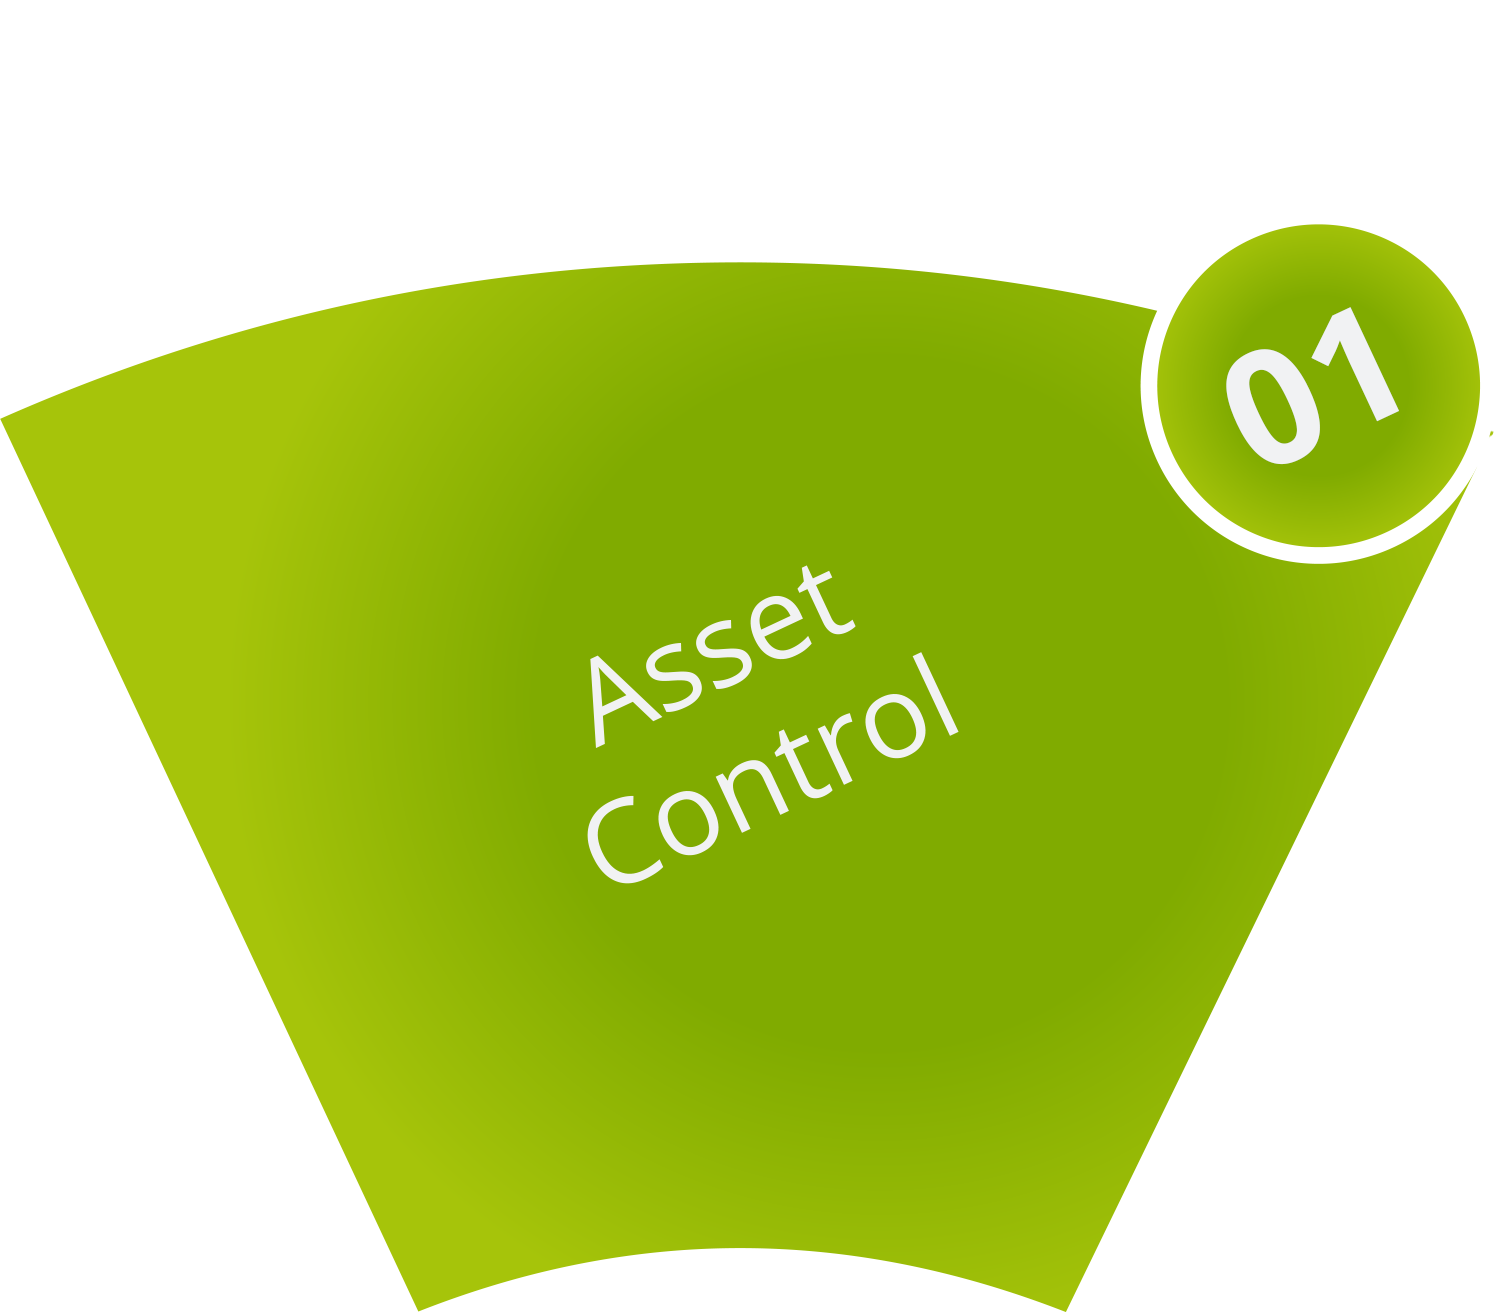 Asset Control